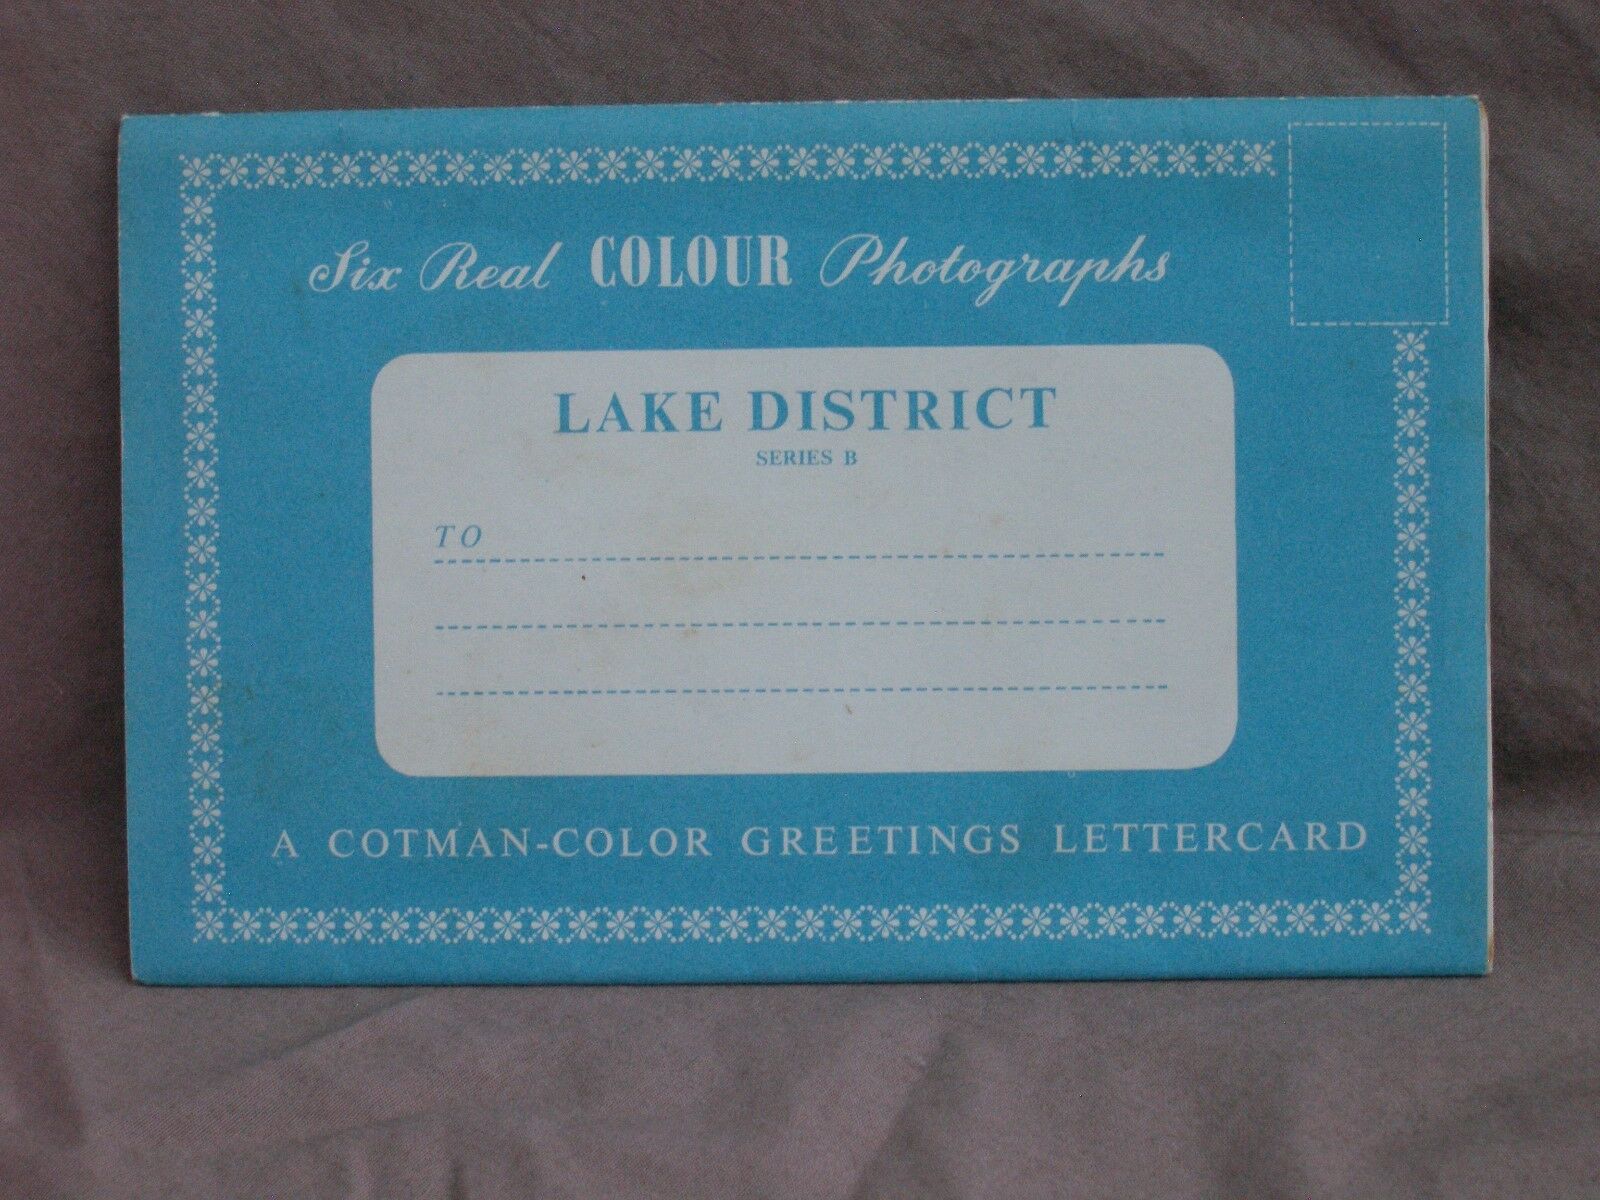 House Clearance - Vintage Cotman-Color Lettercard Of THE LAKE DISTRICT.6 Colour Photos. Series B.